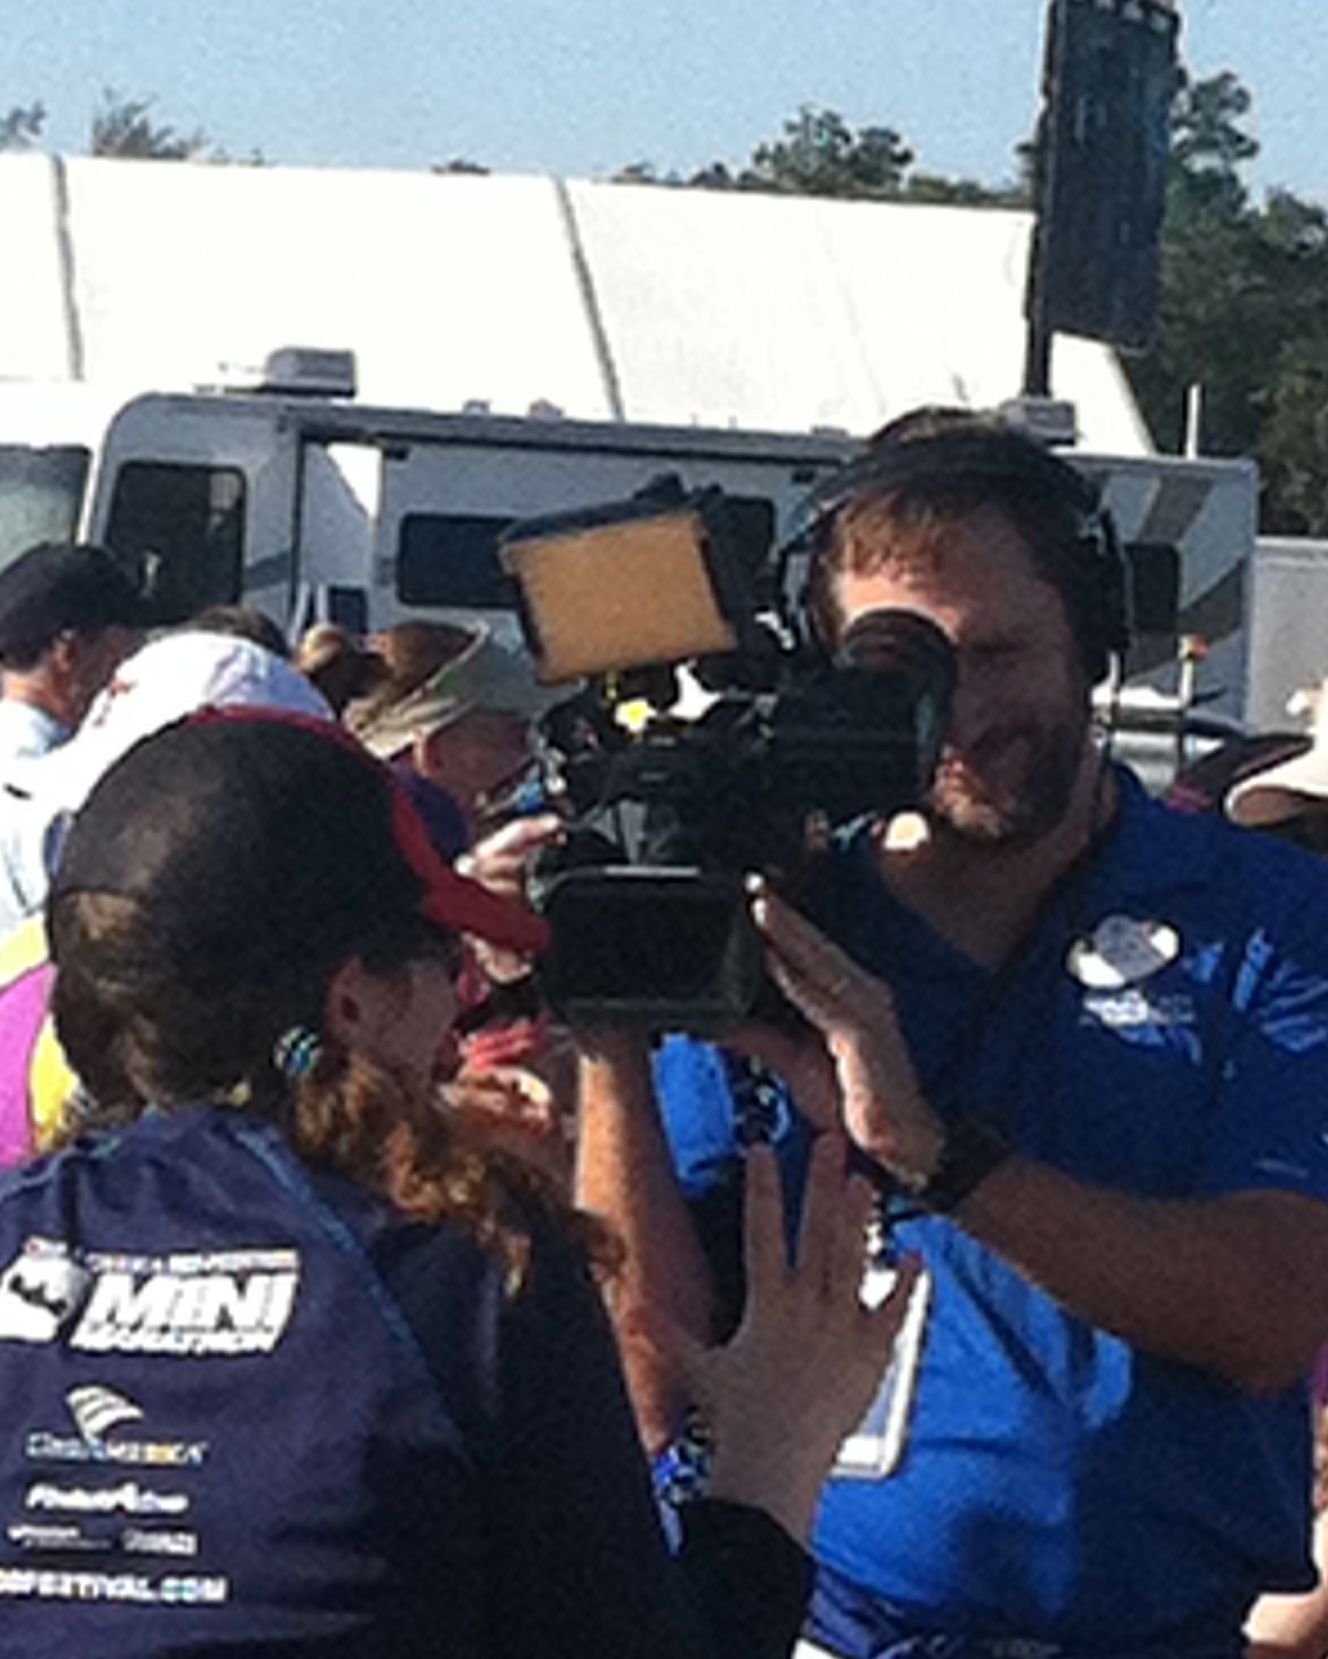 Aurora De Lucia hamming it up for David Baumann's cameras for Disney Sports at the end of the Walt Disney World Half Marathon 2013